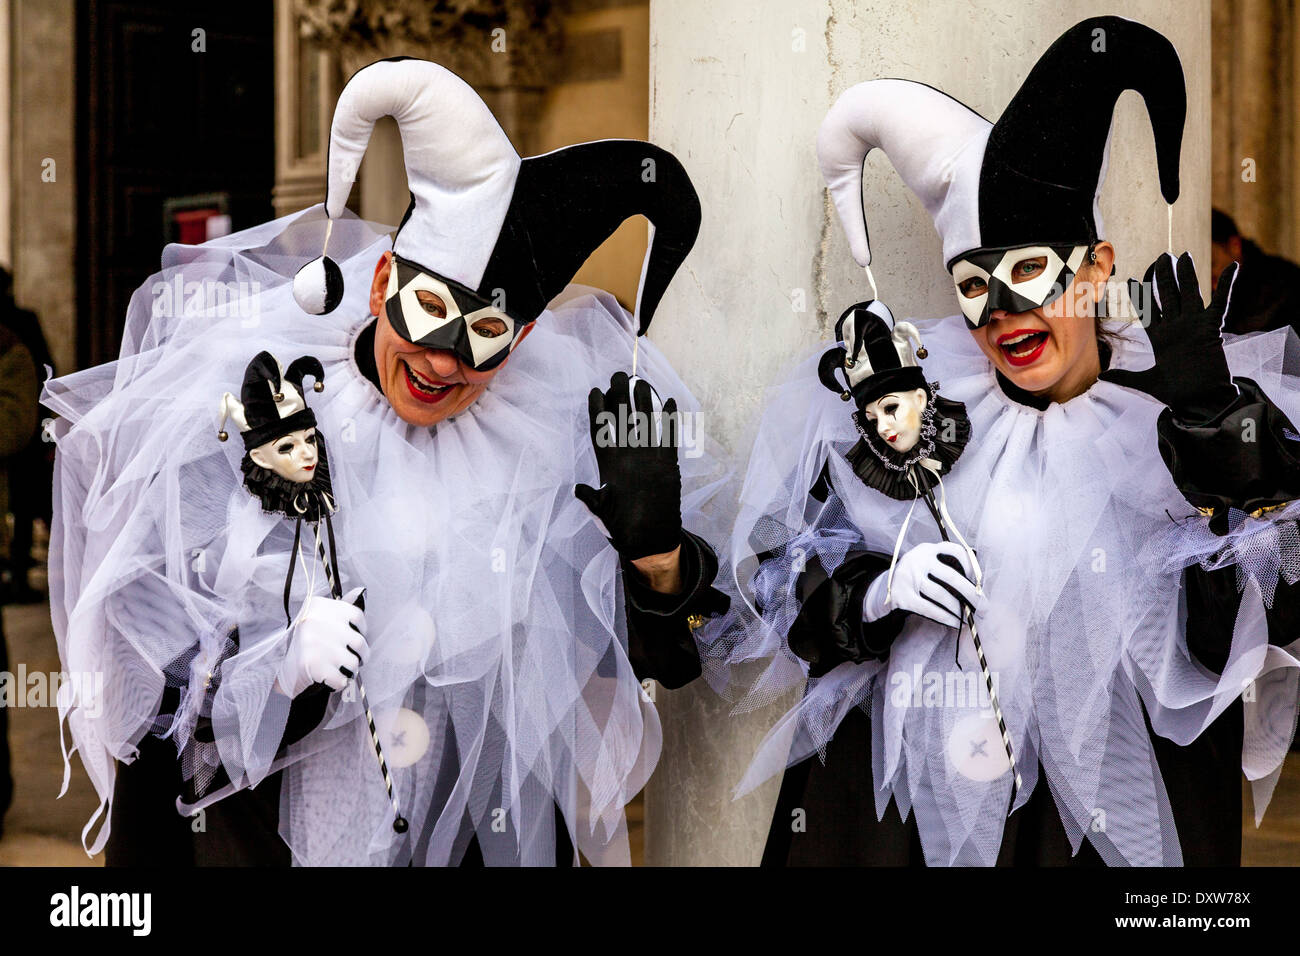 Ein paar In Jester Kostüme, Karneval in Venedig, Venedig, Italien  Stockfotografie - Alamy